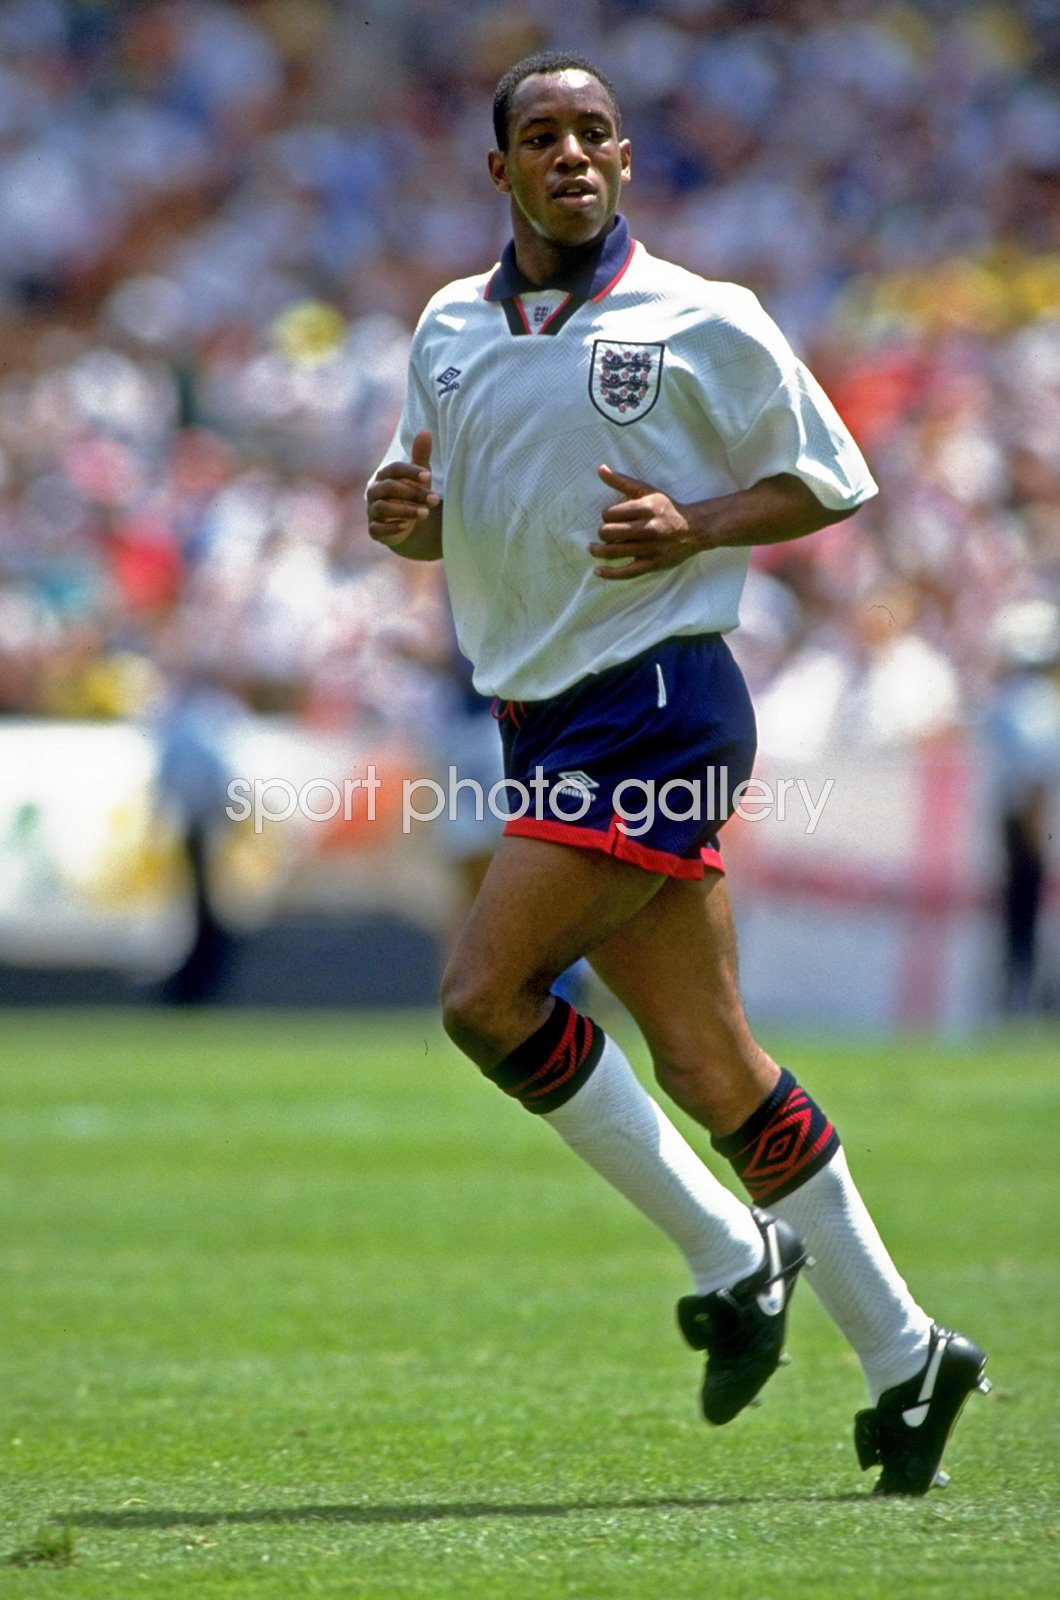 England 1993 - 1995 Home Football Shirt